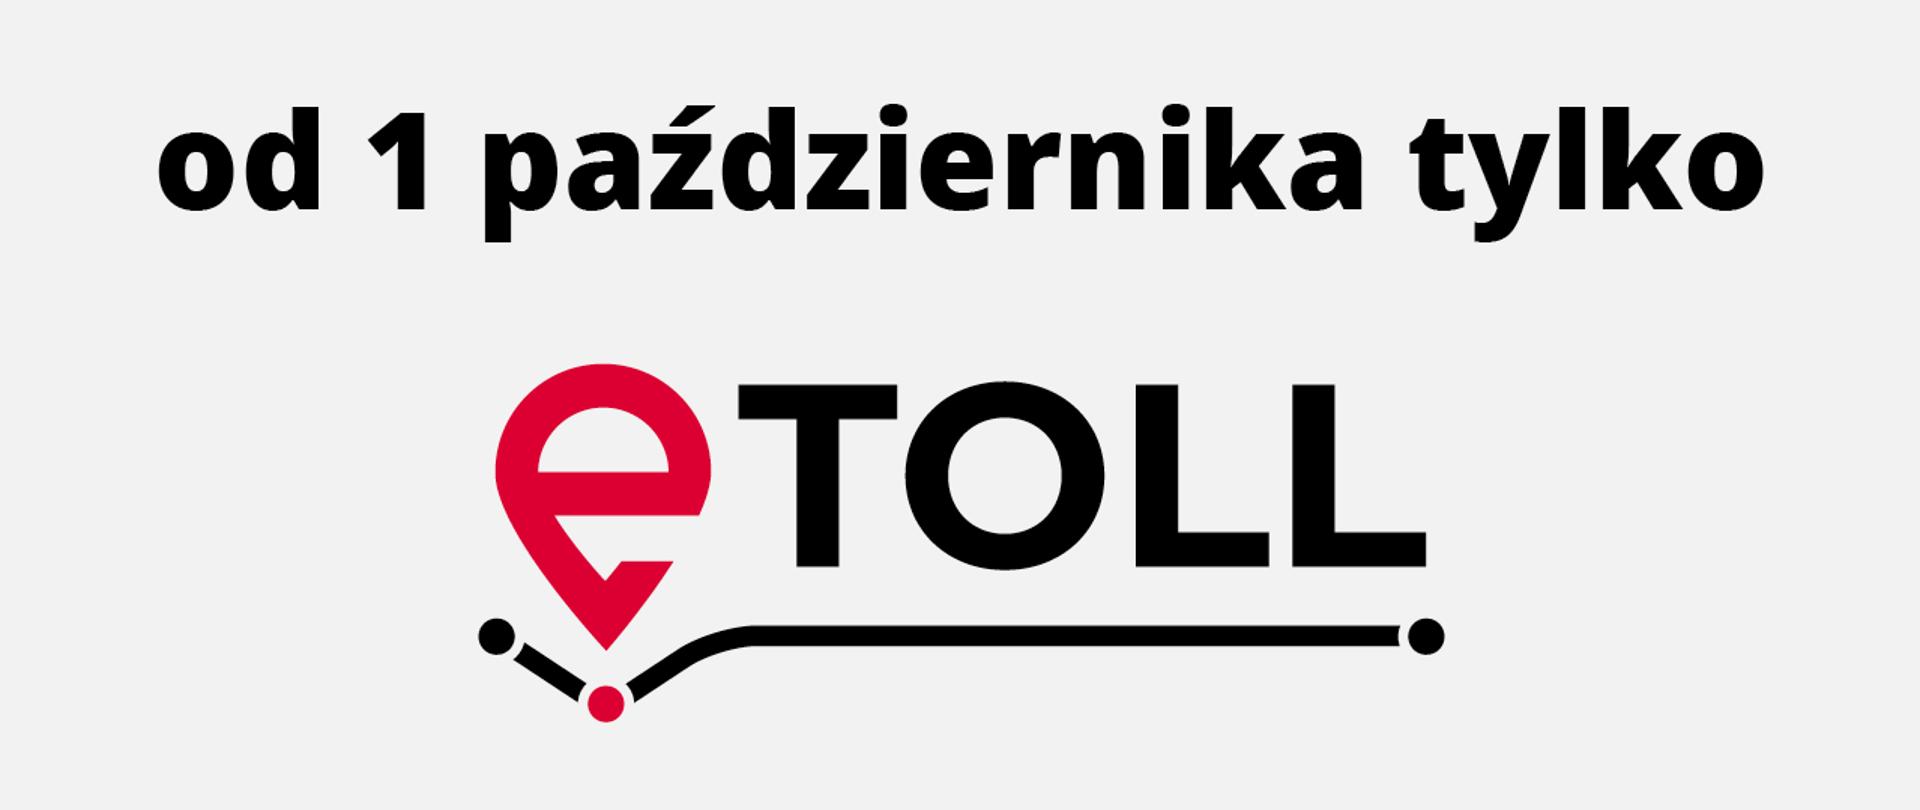 Logo e-TOLL, napis Od 1 października tylko e-TOLL.